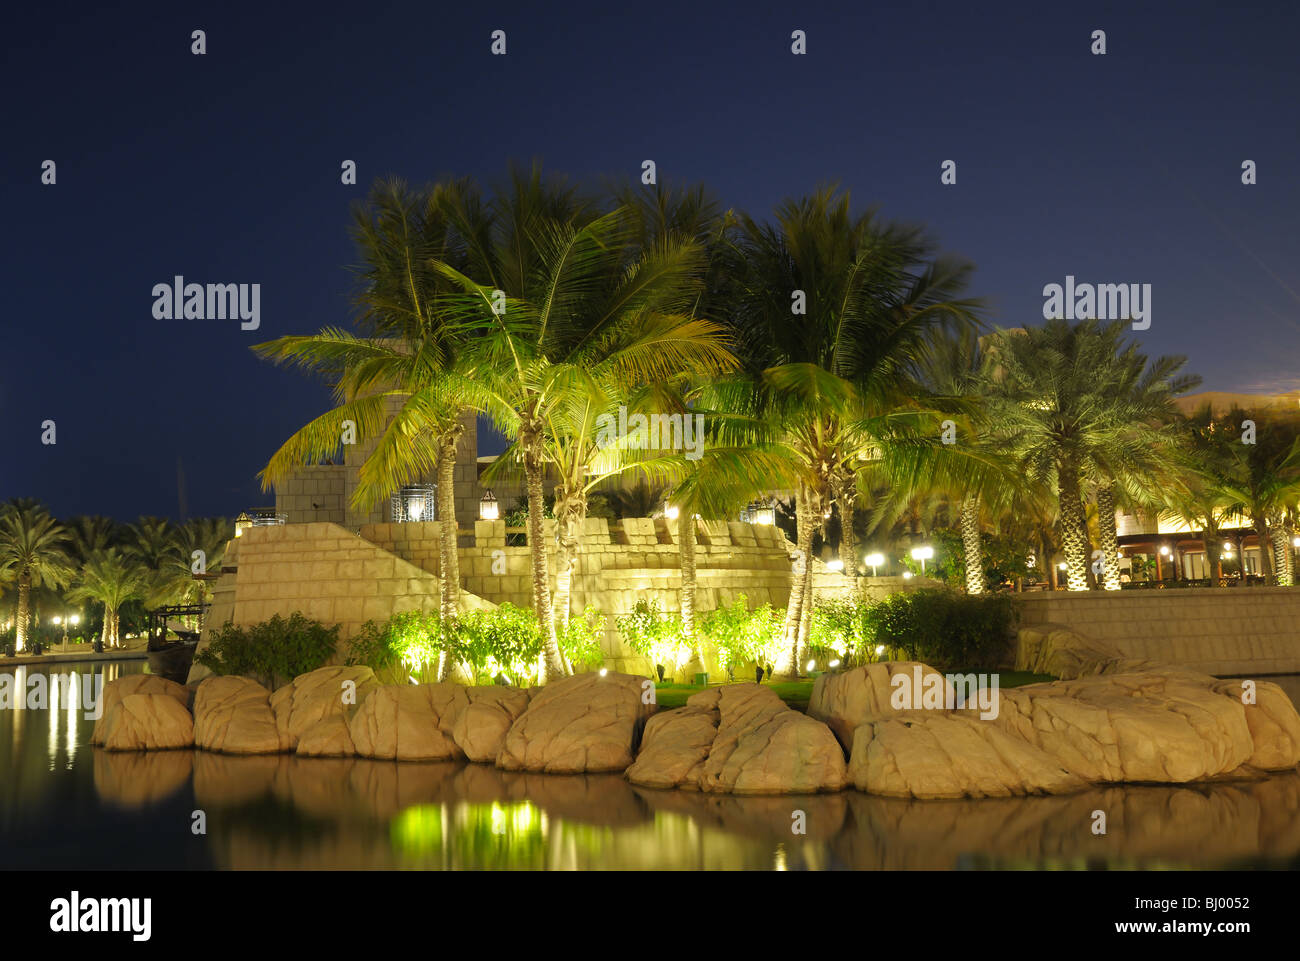 Illuminated Palm Trees in Madinat Jumeirah Resort, Dubai, United Arab Emirates Stock Photo